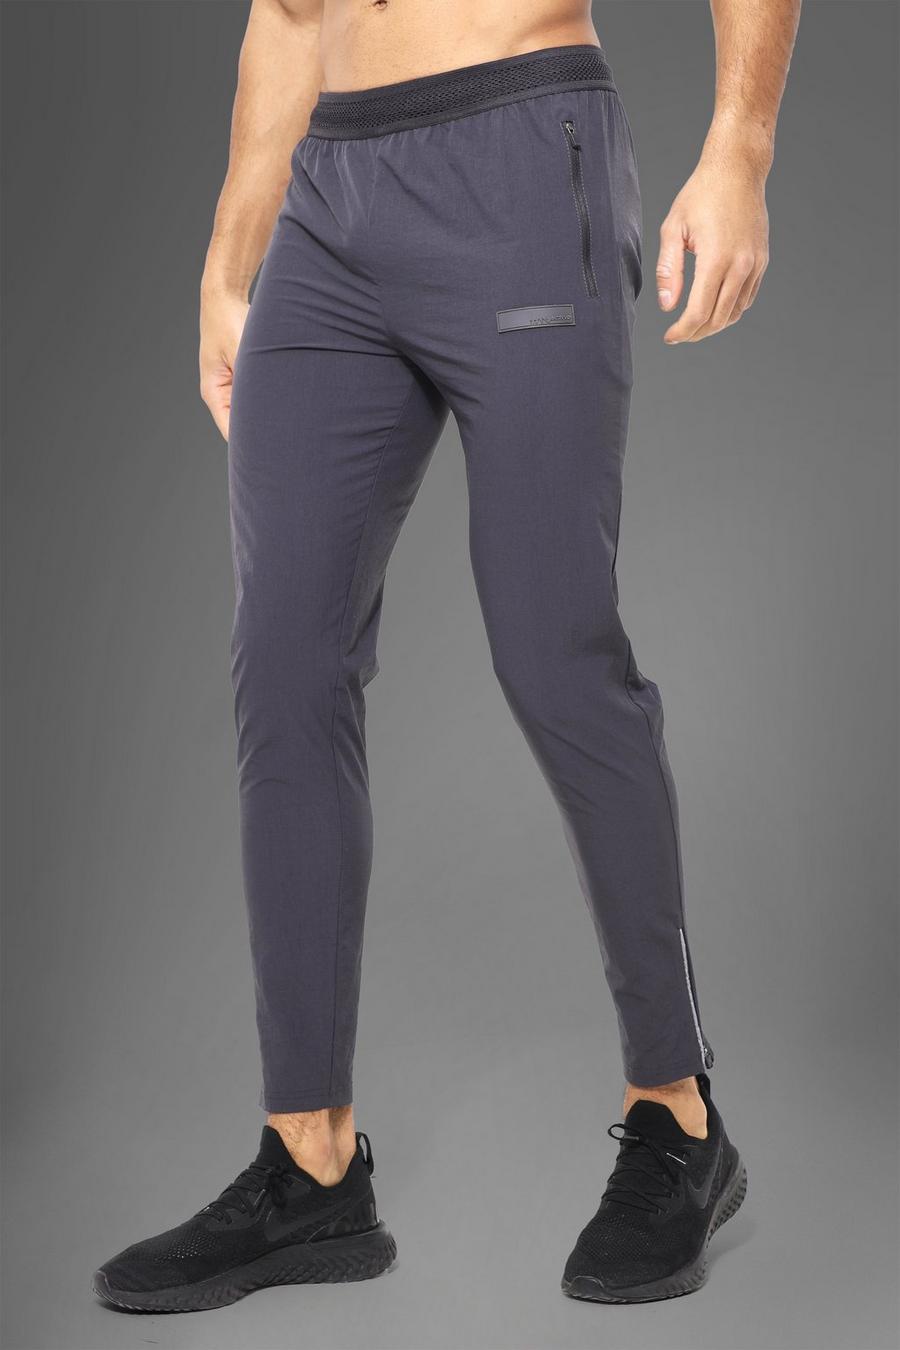 Pantaloni da corsa Man Active Gym con trama in rilievo, Charcoal gris